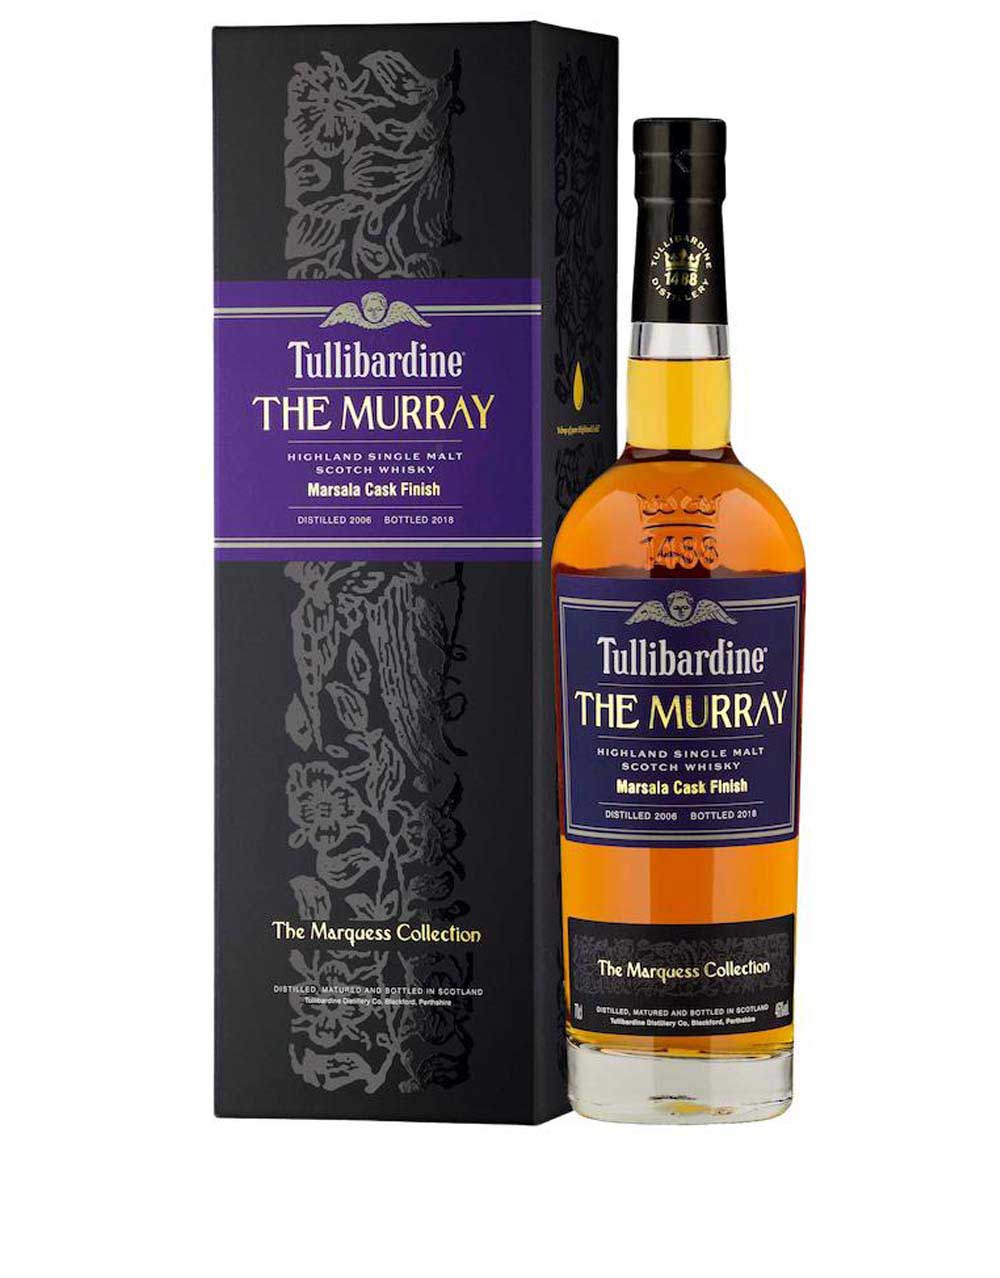 Tullibardine The Murray Marsala (The Marquess Collection) Cask Finish Single Malt Scotch Whisky